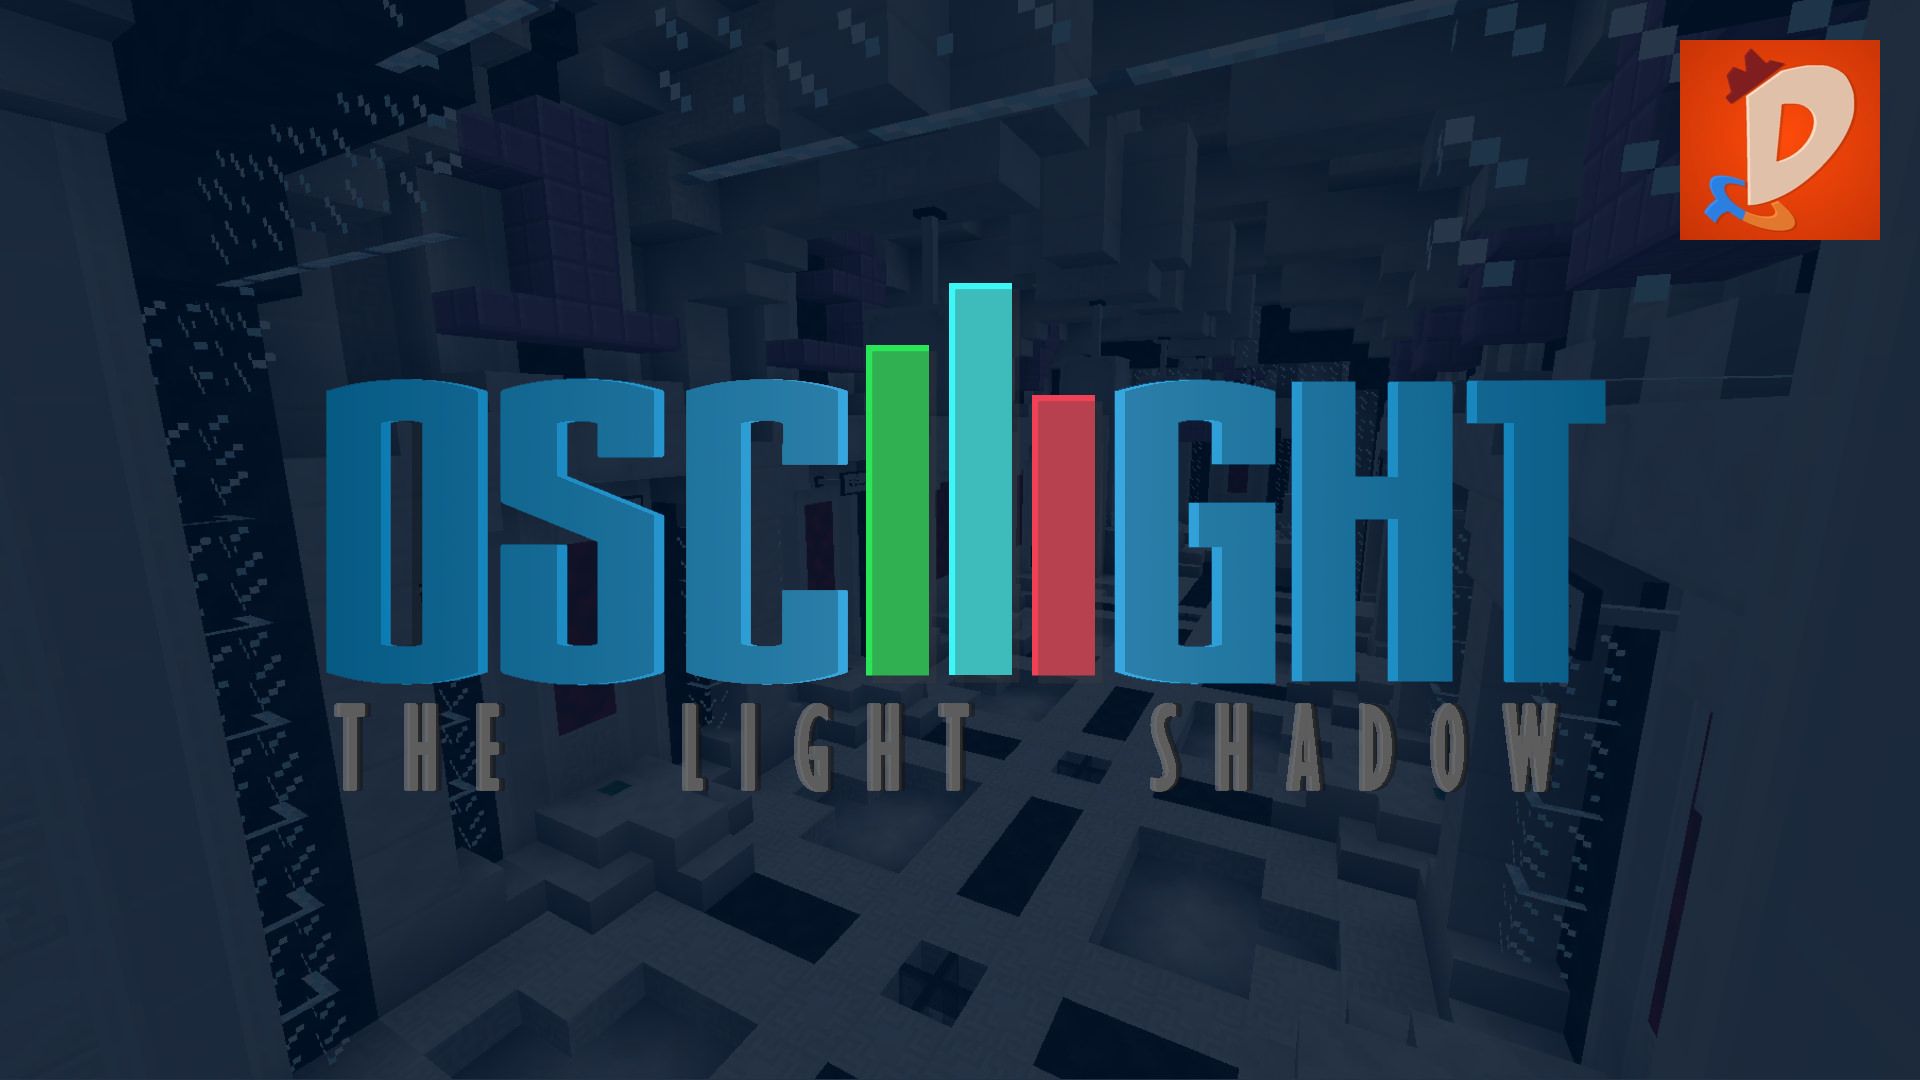 Oscilight: The light shadow